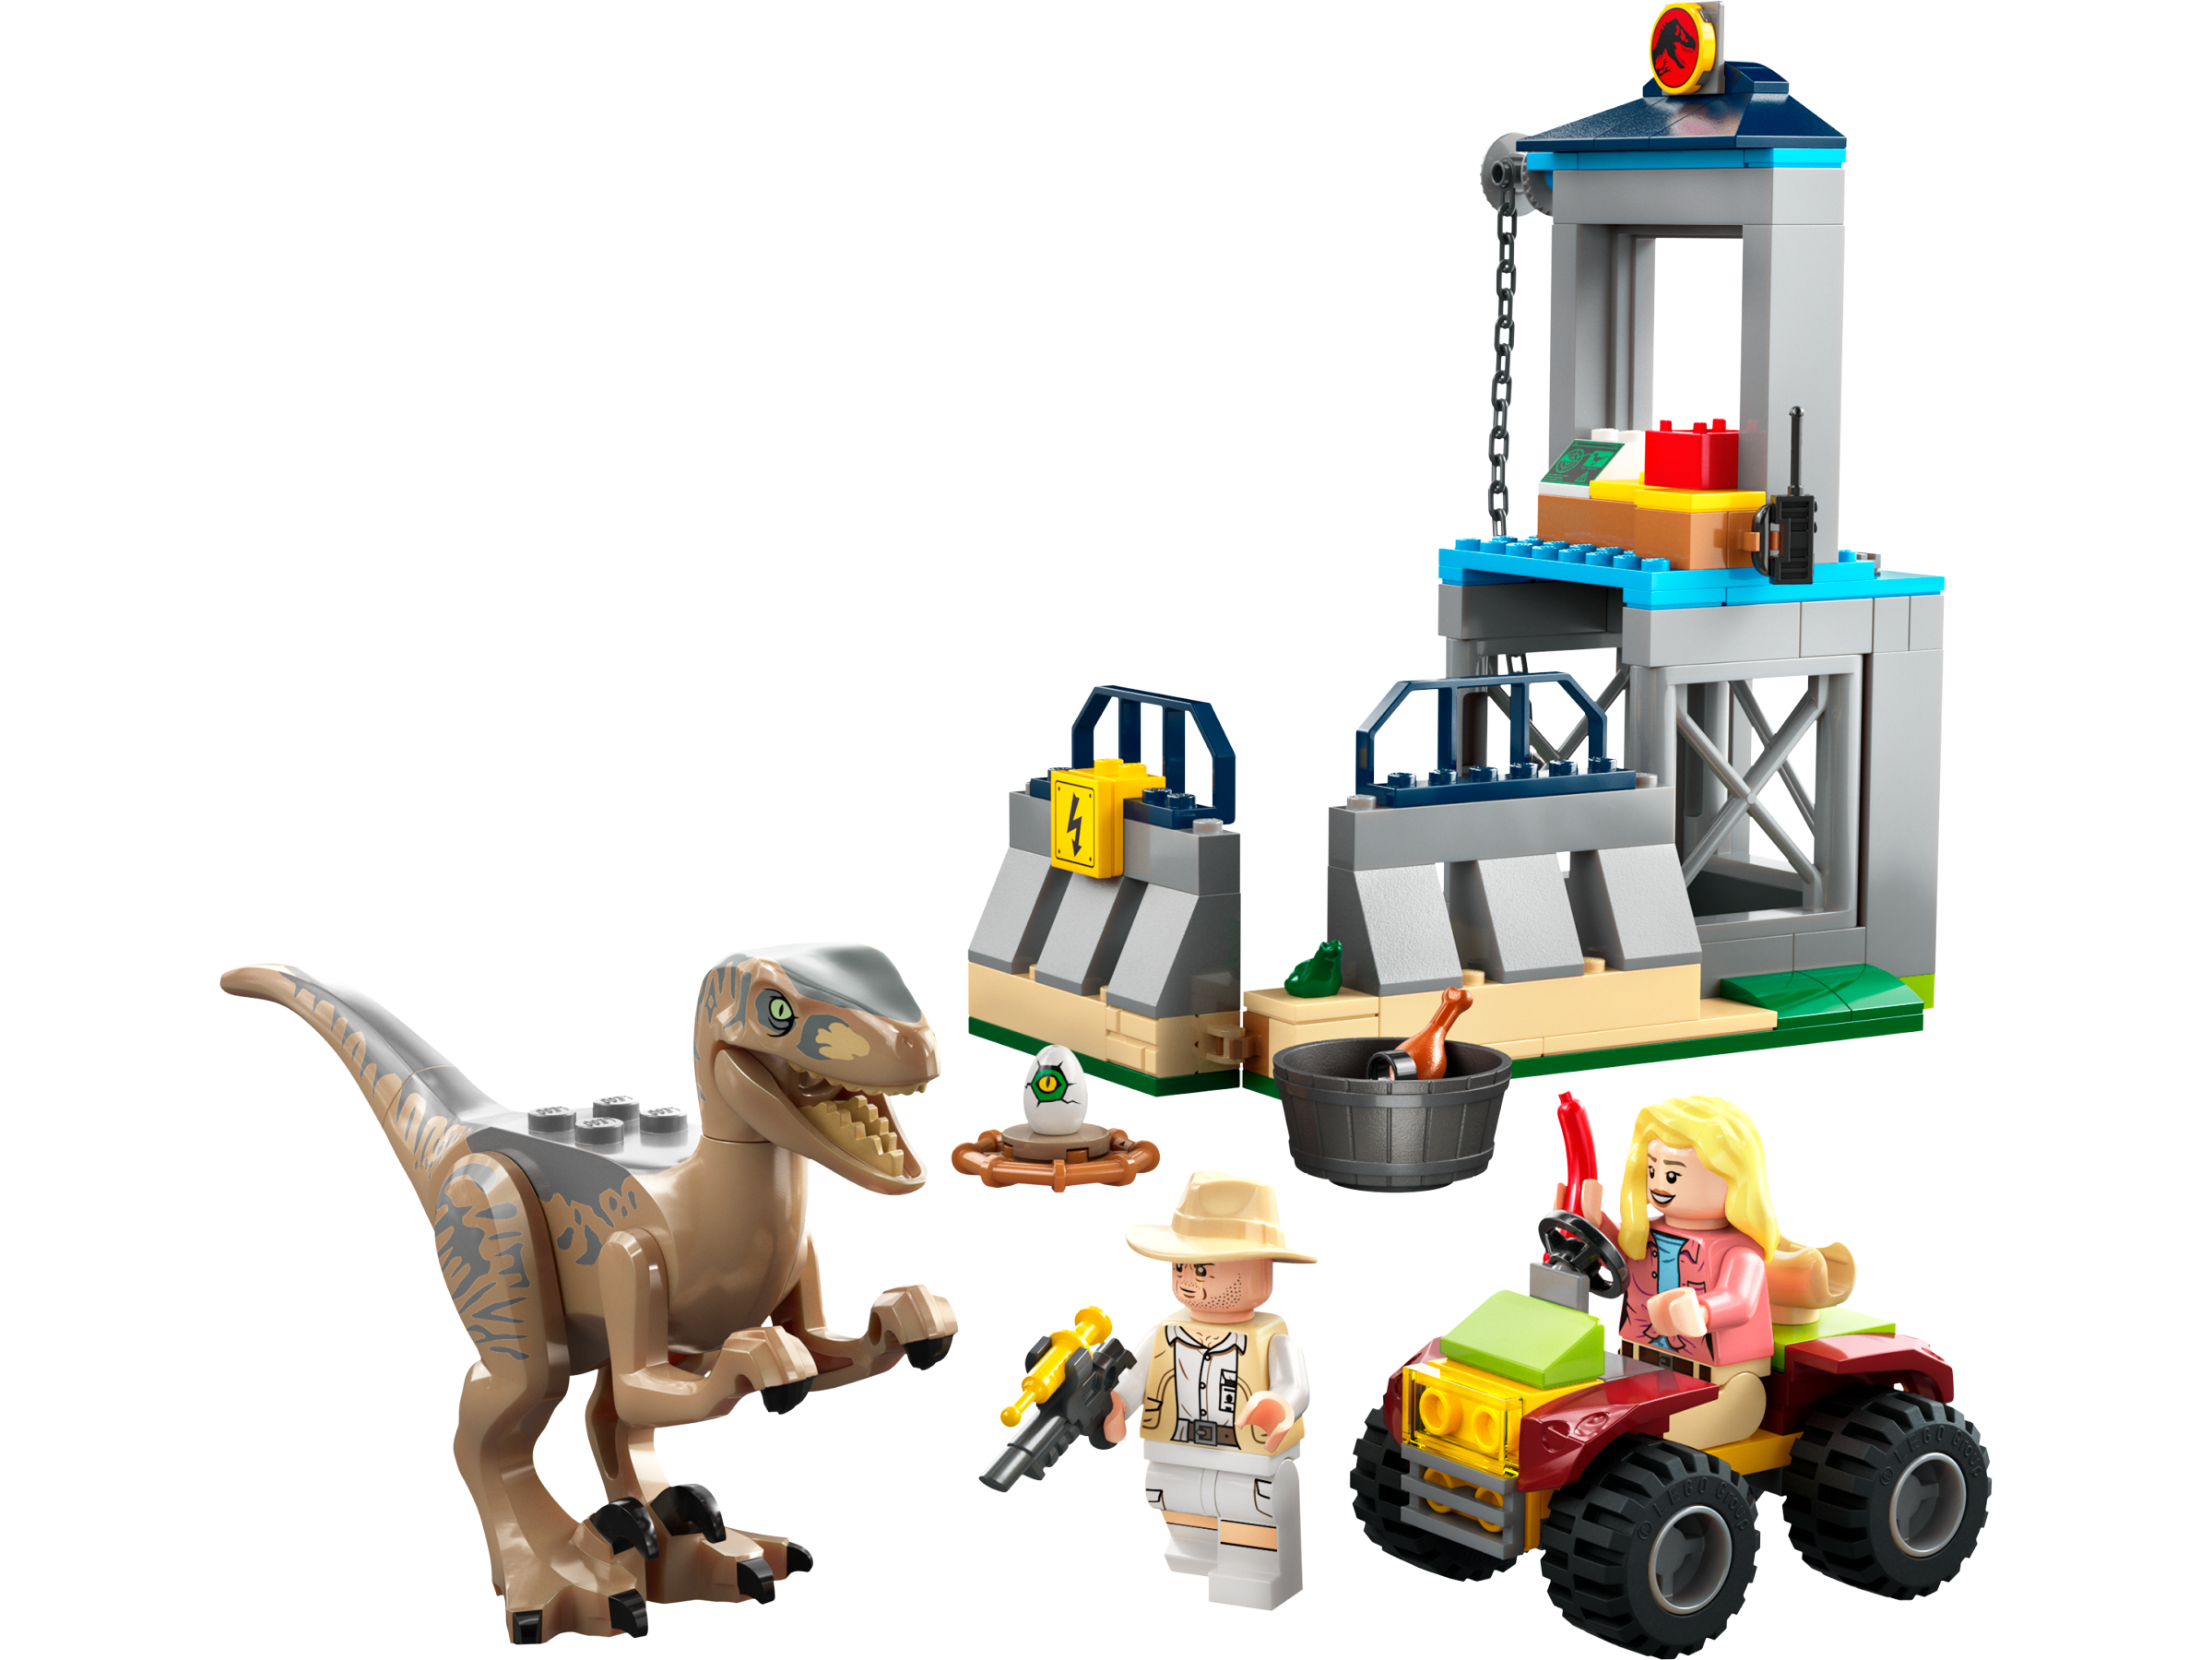 LEGO Jurassic Park Velociraptor Escape Dinosaur Toy 76957